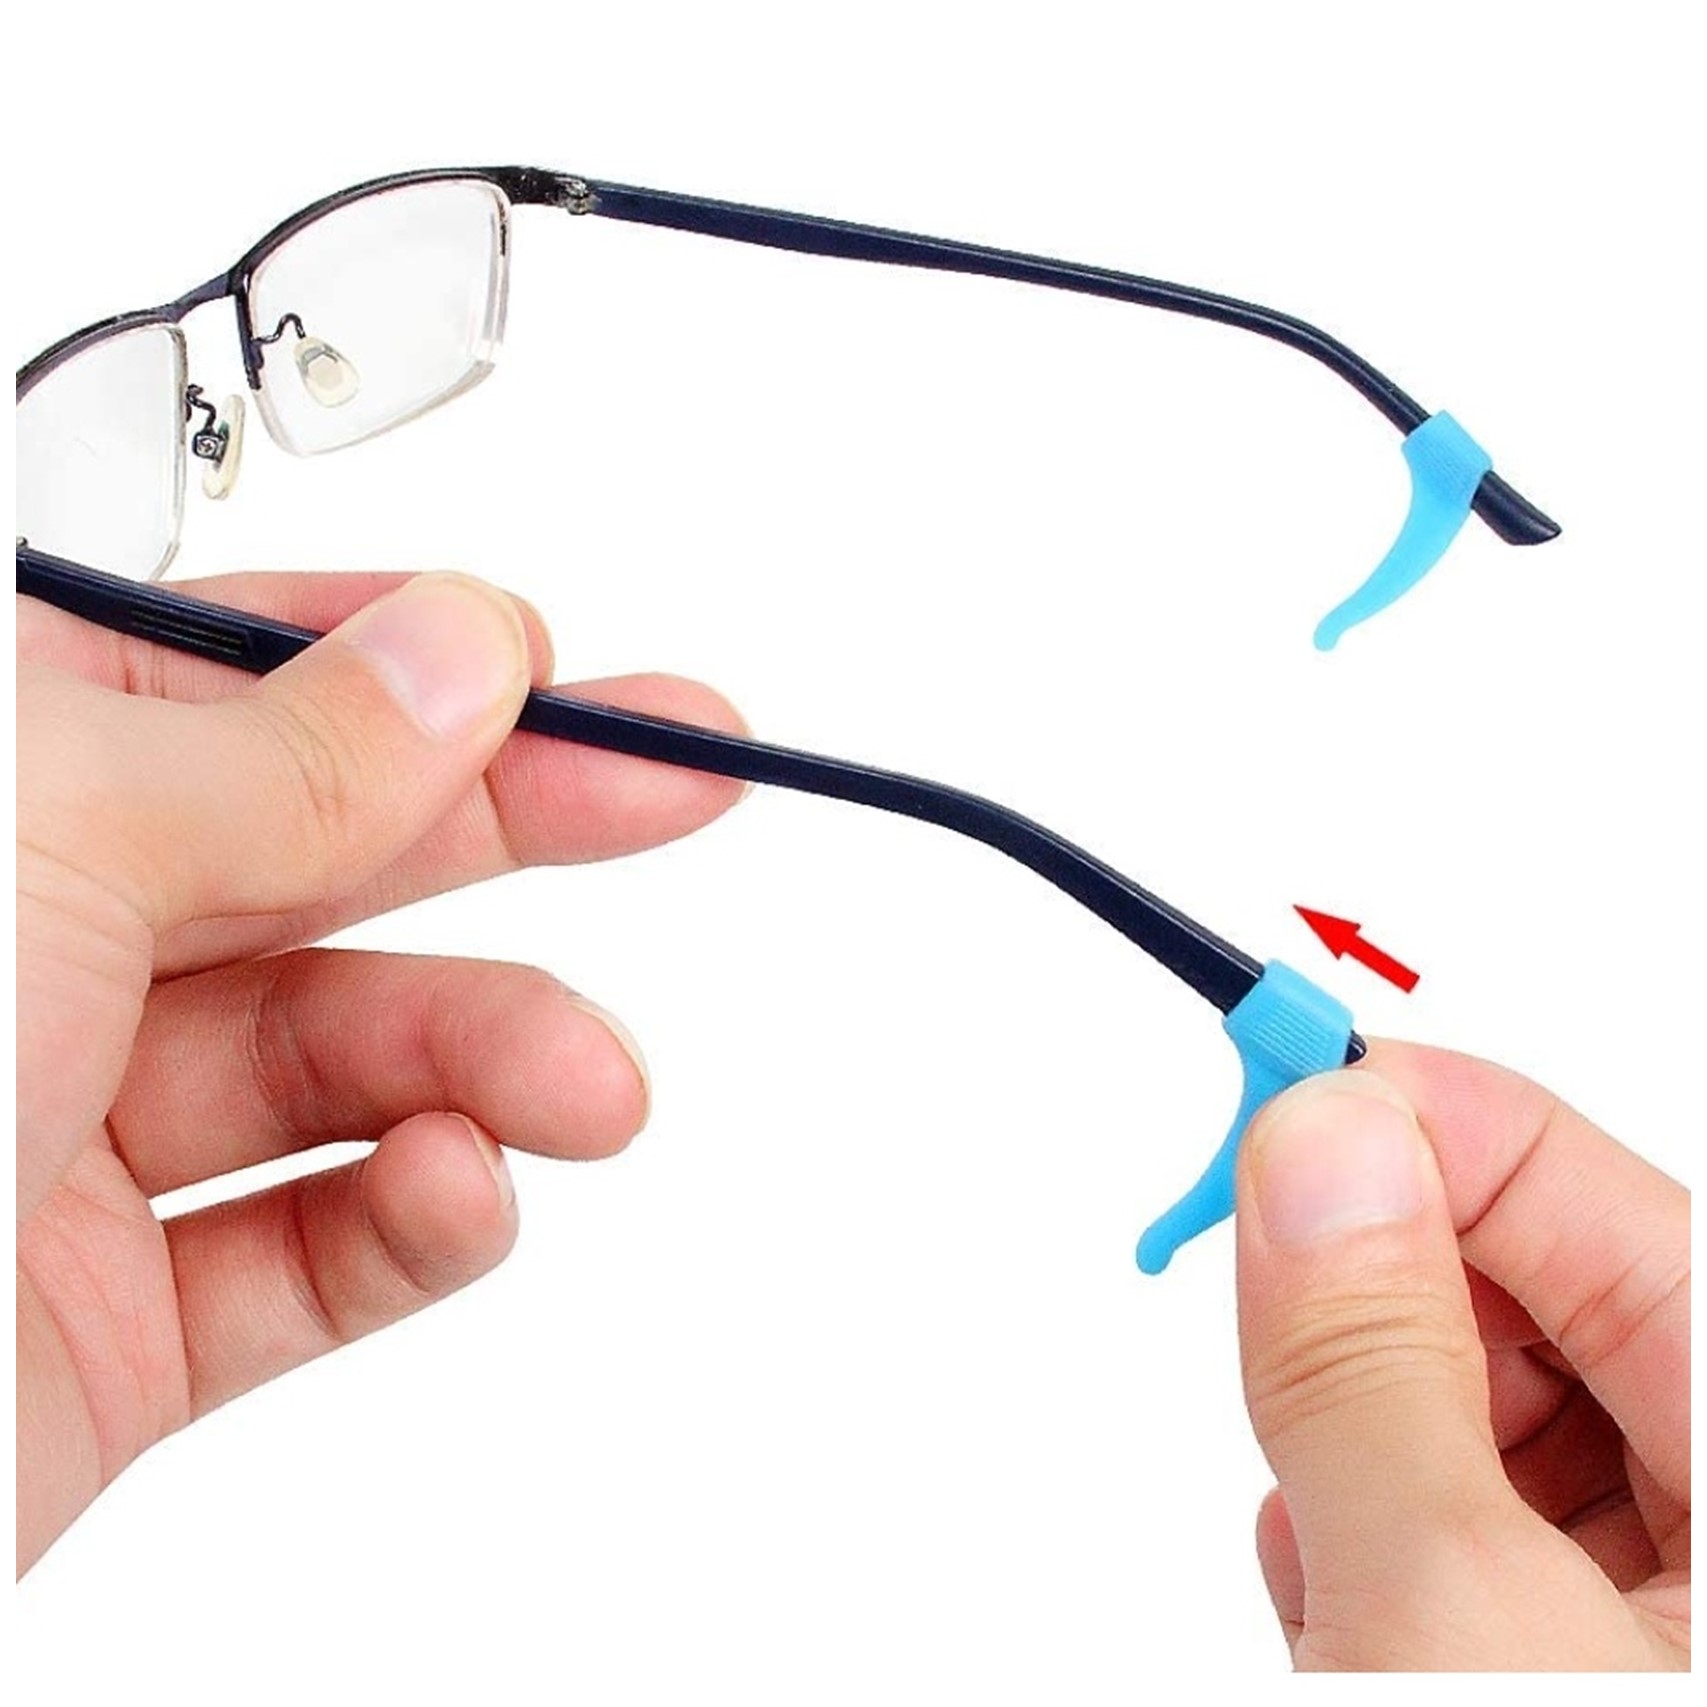 Artibetter 20 Pares de Gafas de Silicona Suave retenedores de Gafas con Gancho para la Oreja Transparente 